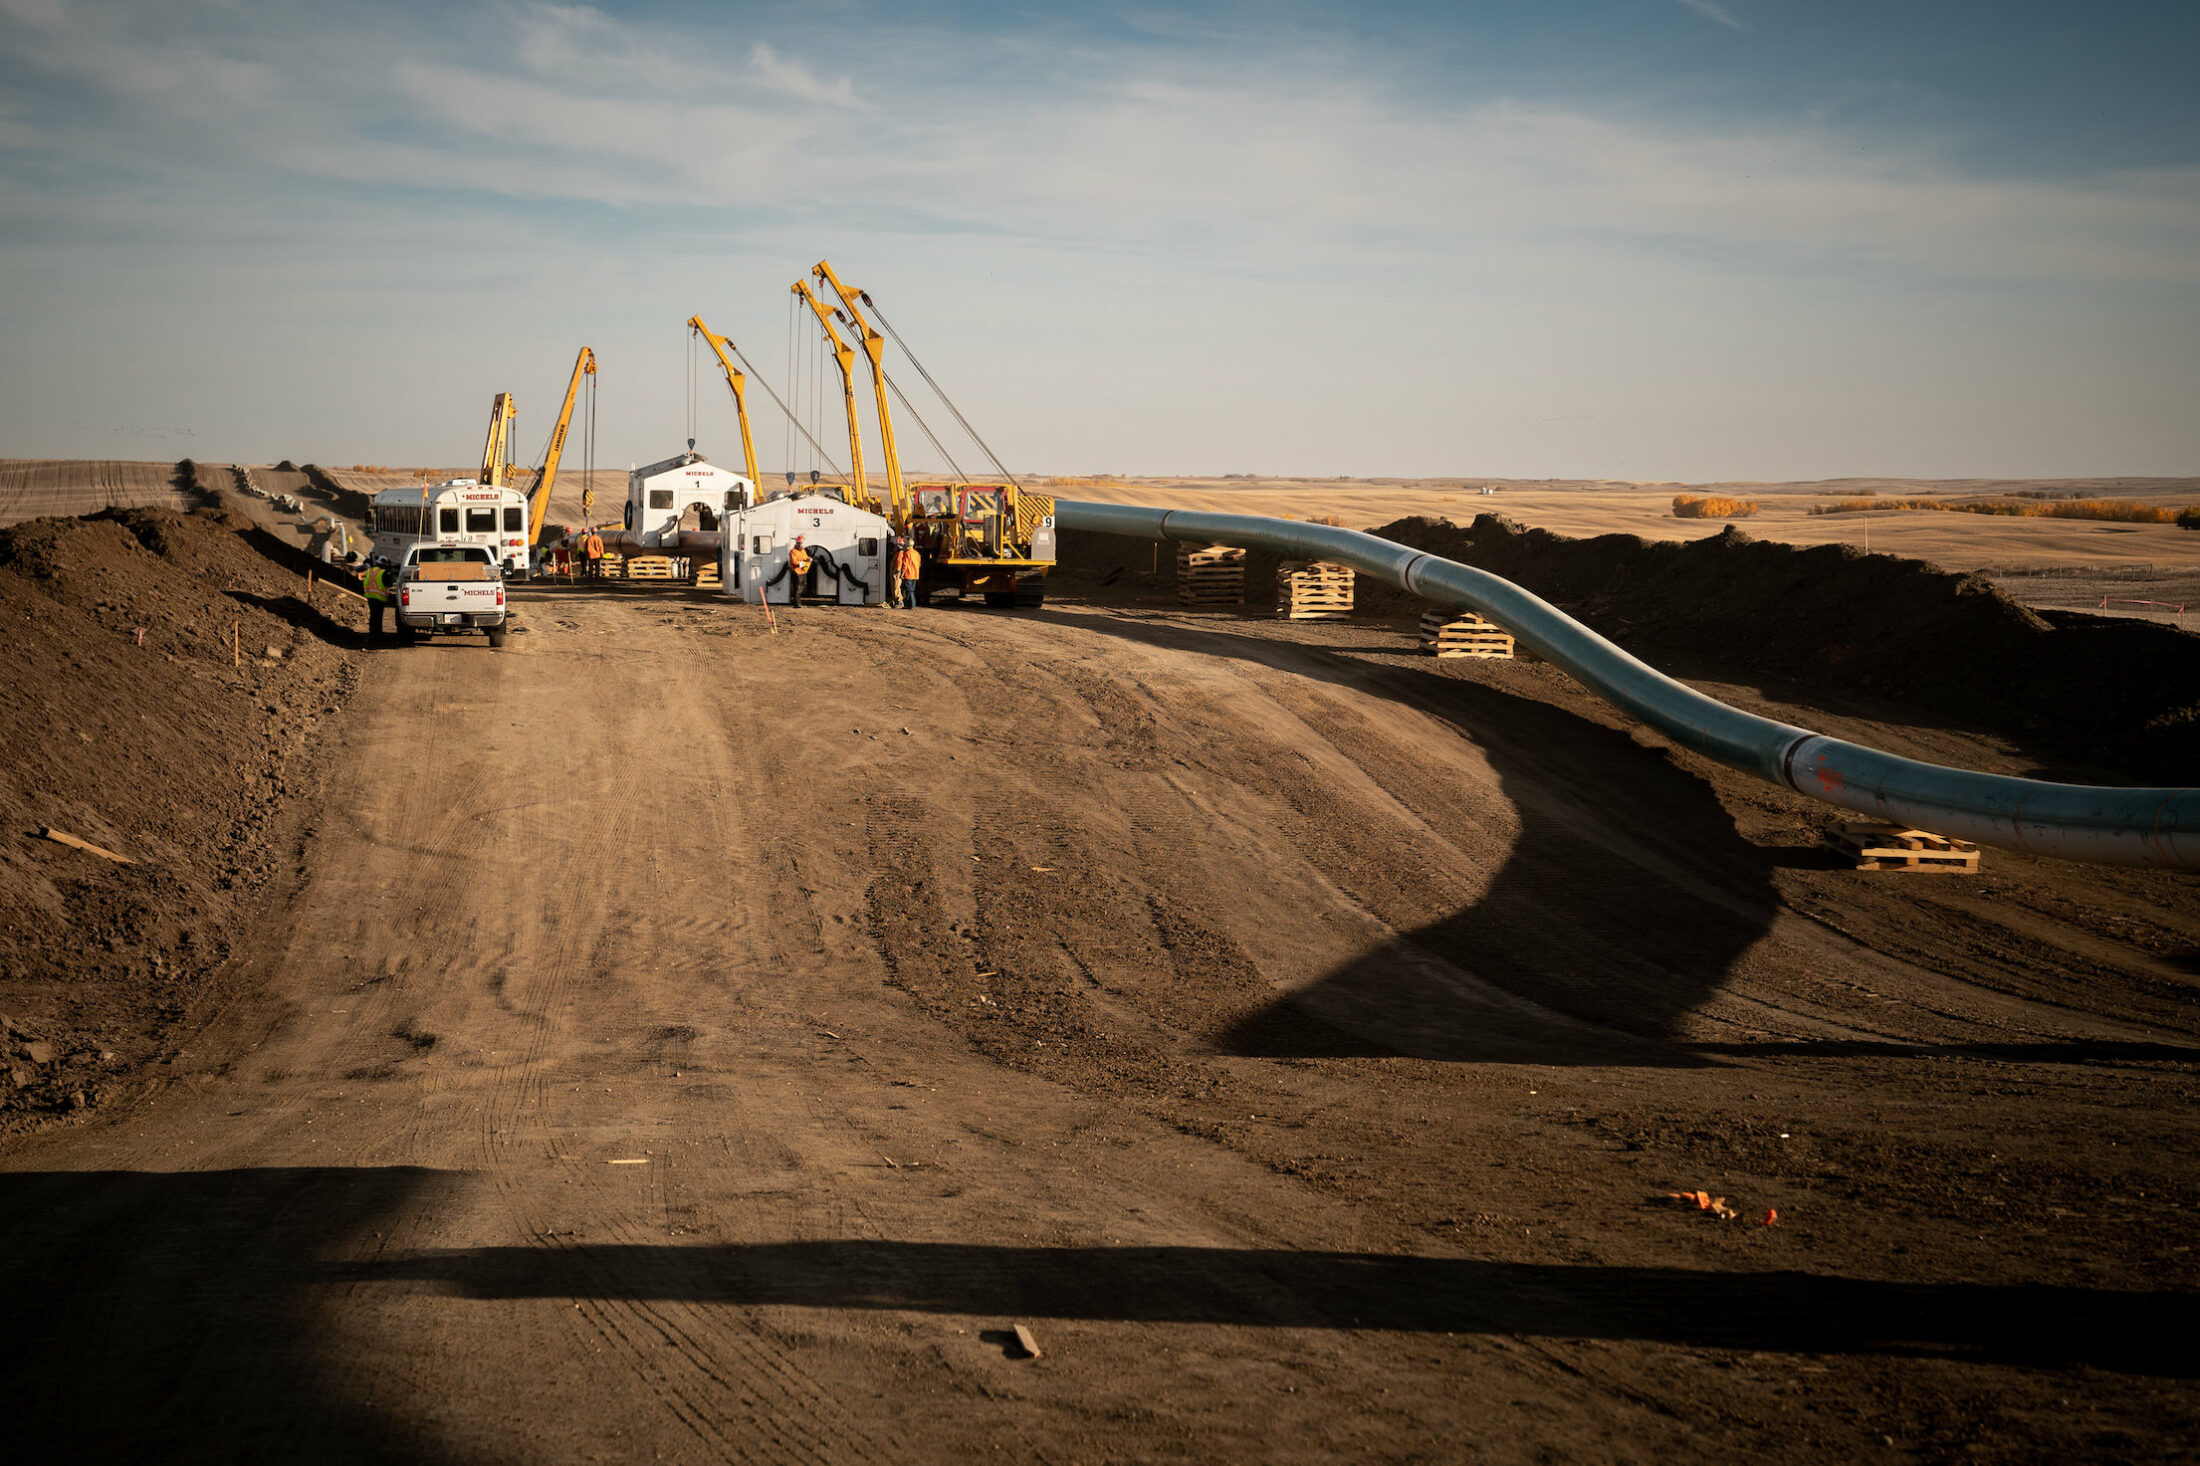 Biden climate change plans affect Keystone XL pipeline construction in Alberta